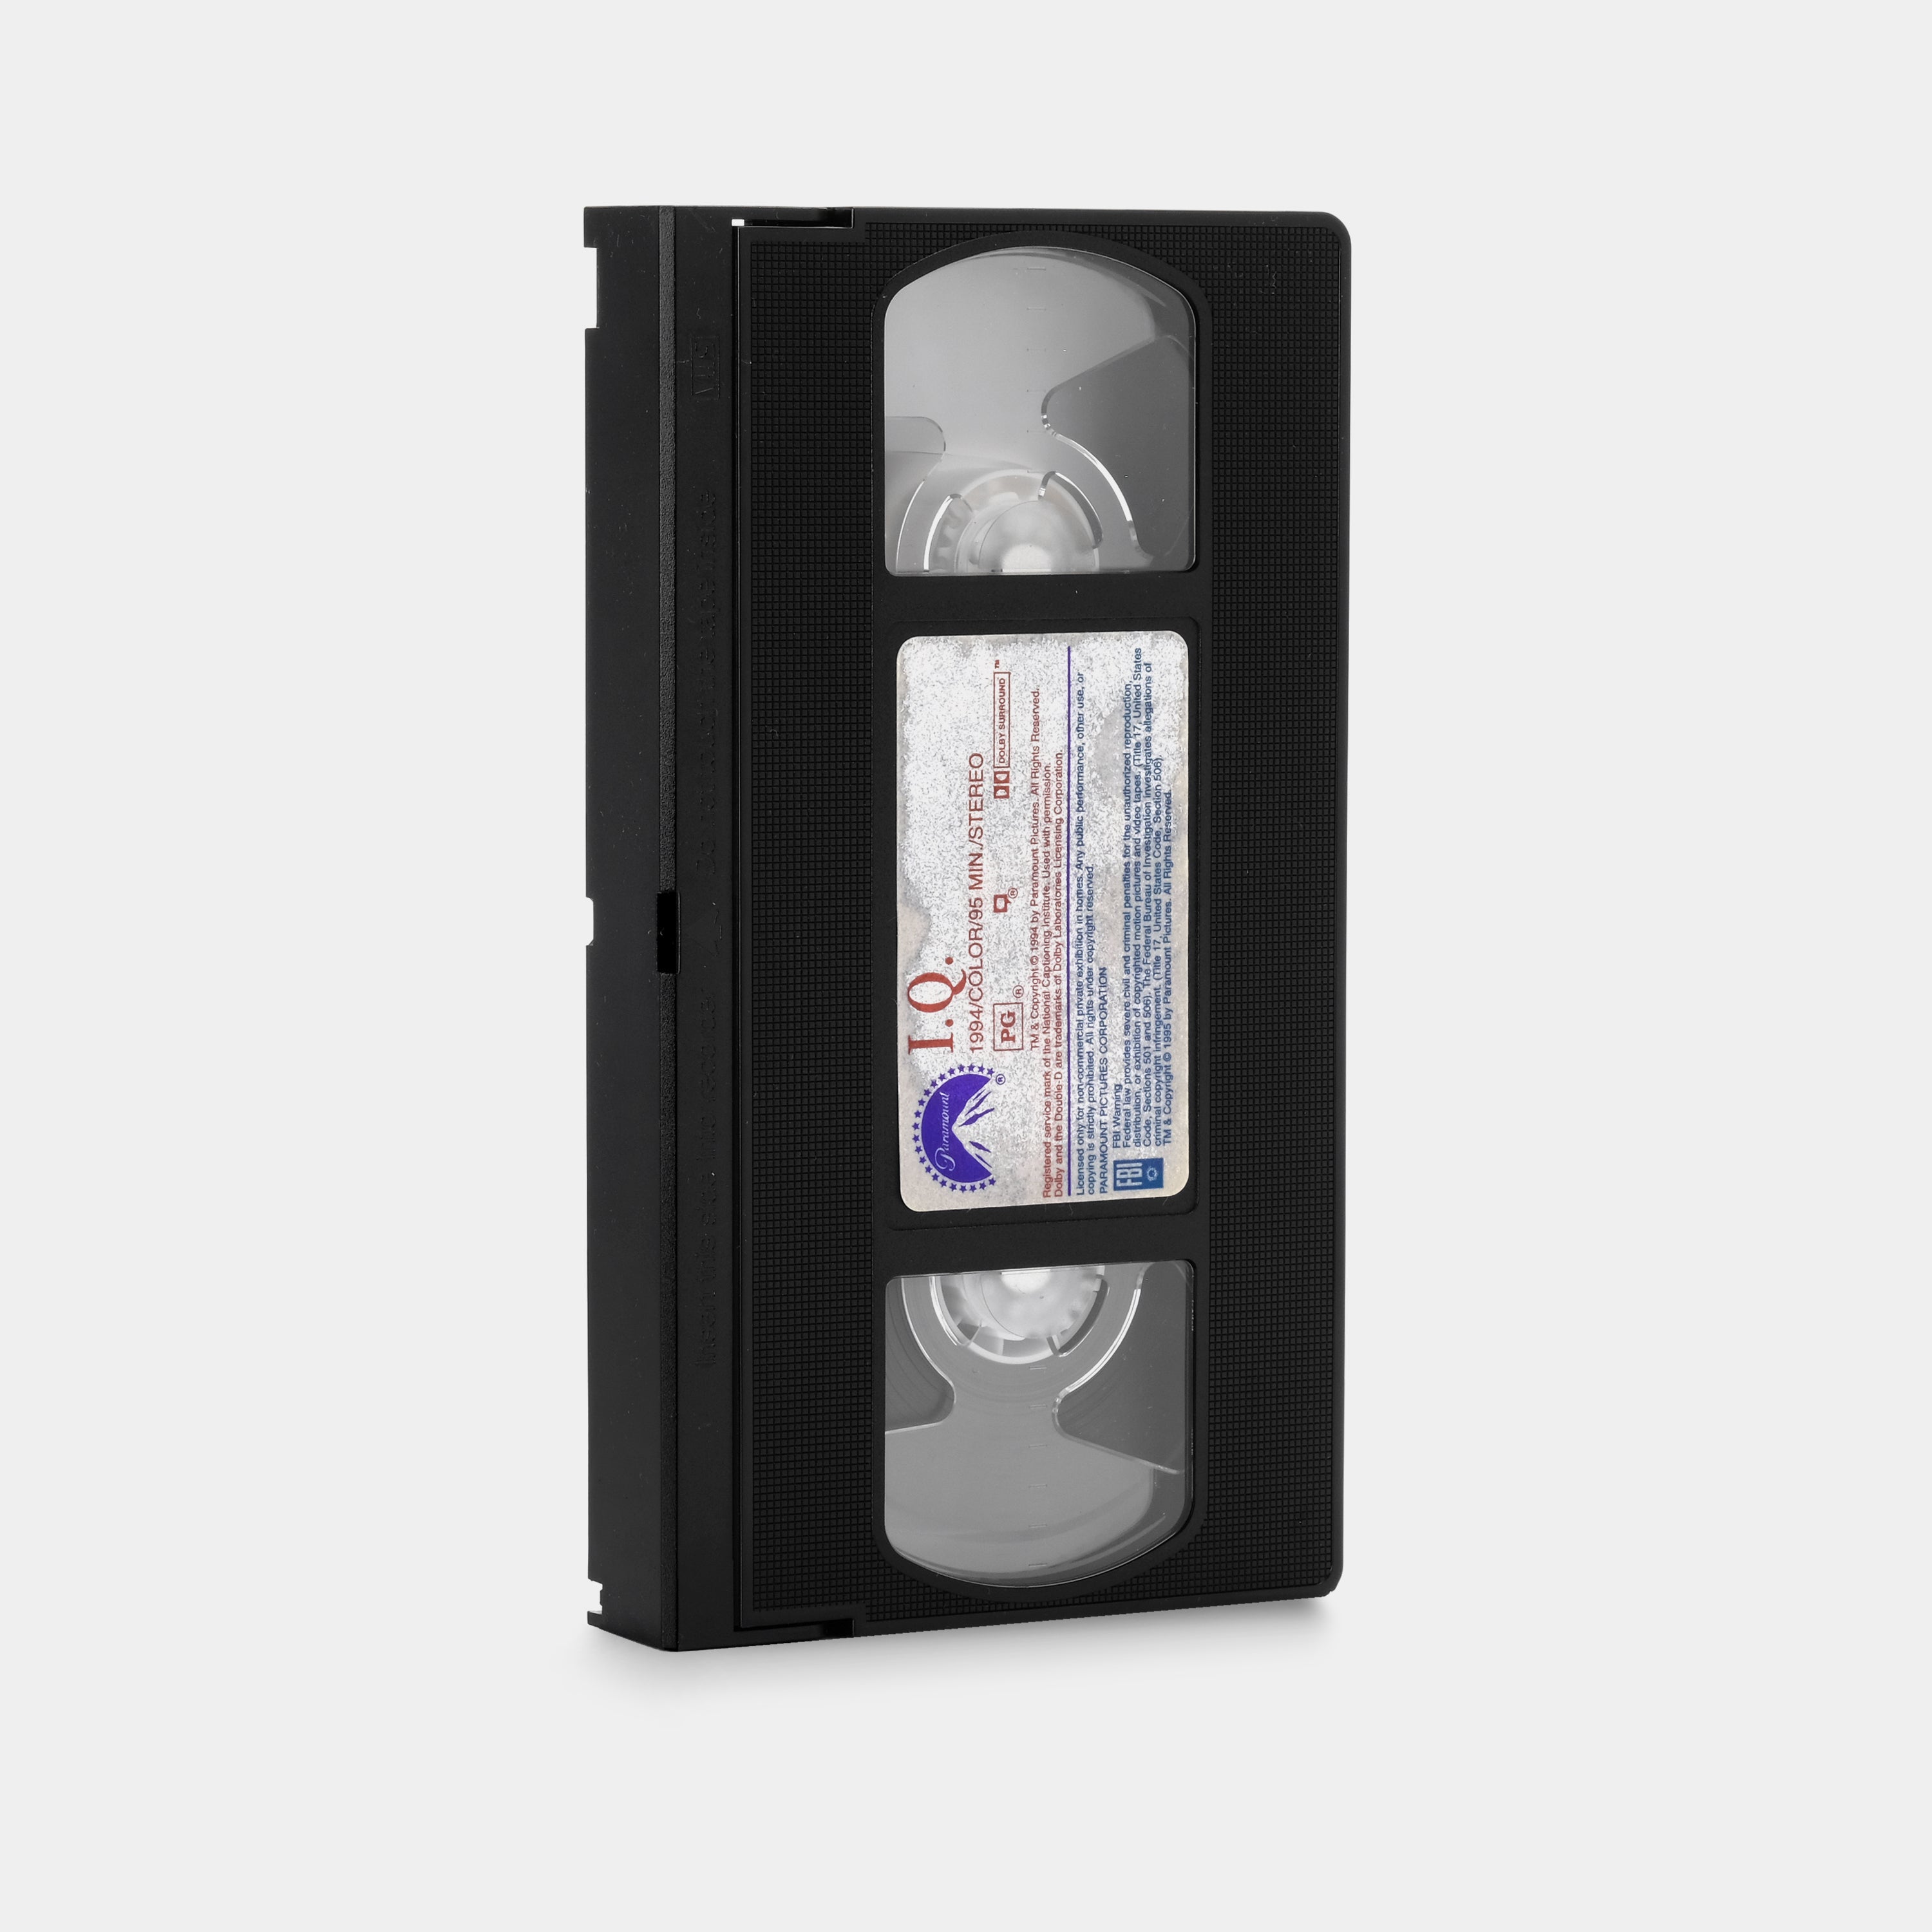 I.Q. VHS Tape